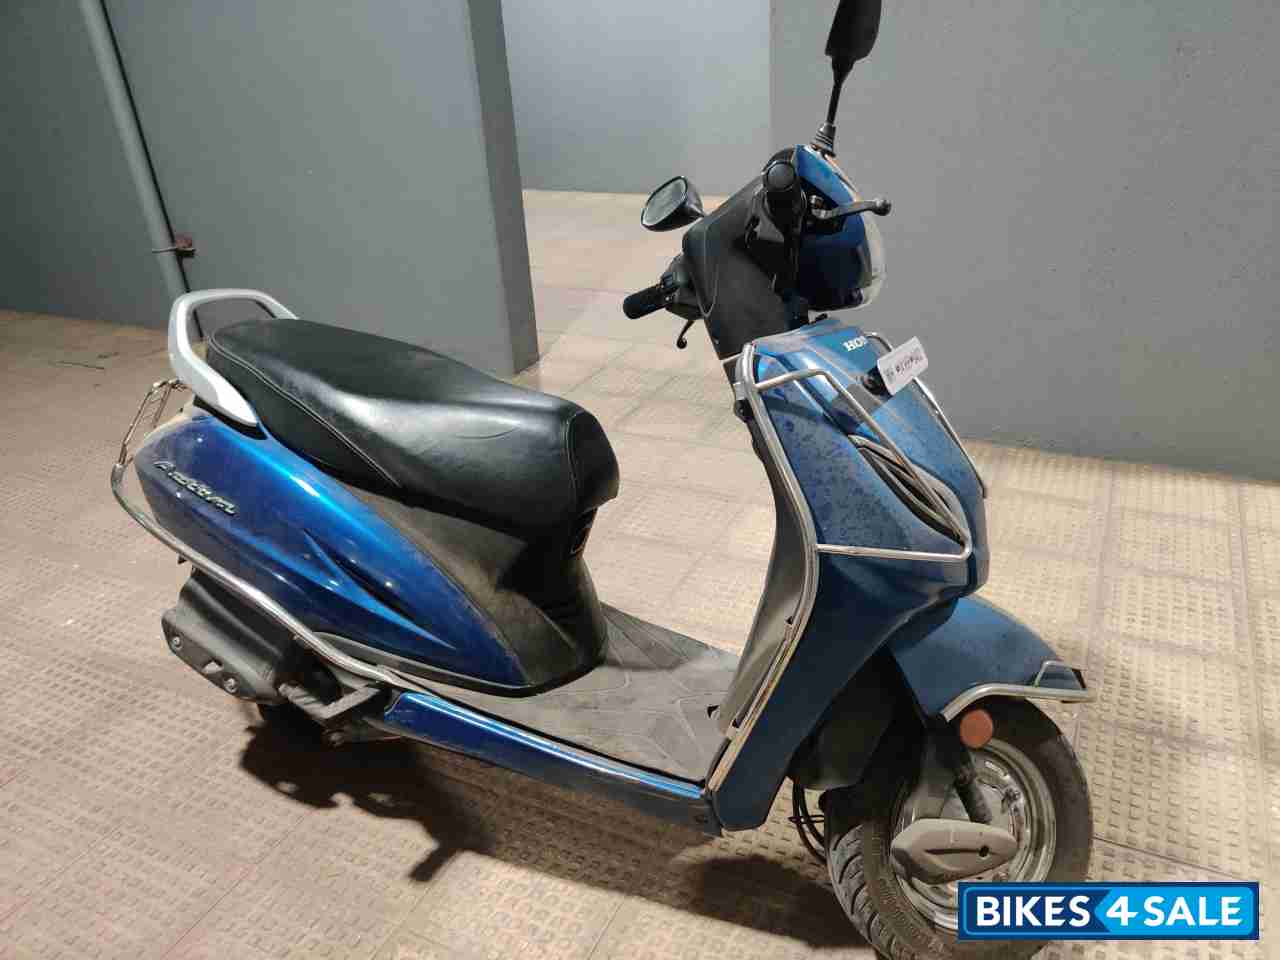 Blue Honda Activa 5G Picture 1. Bike ID 447923. Bike located in Pune -  Bikes4Sale